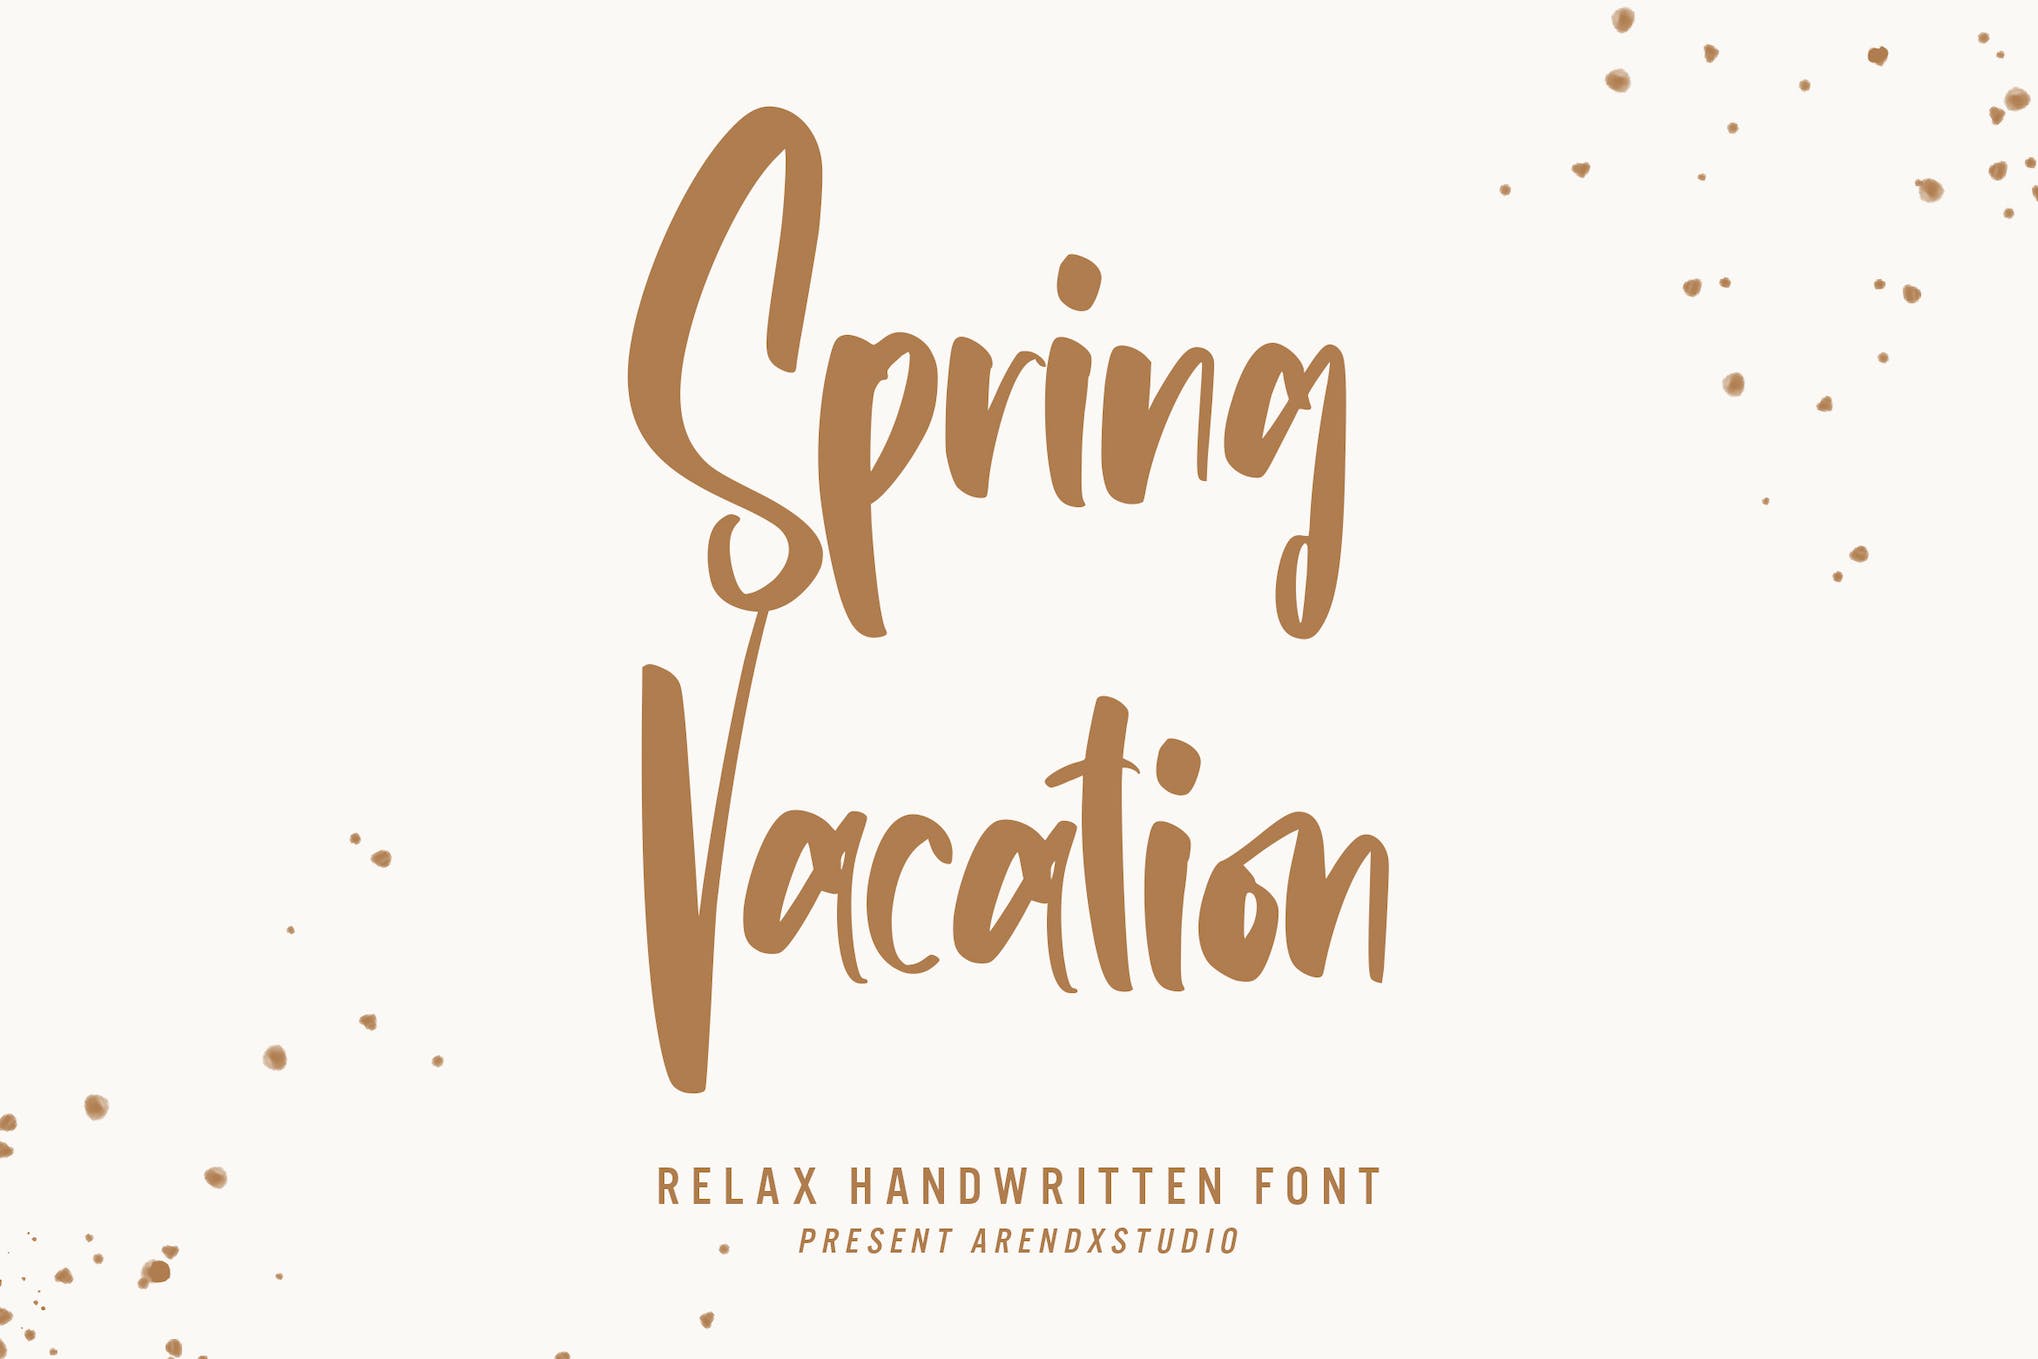 Spring Vacation - Relax Handwritten Font